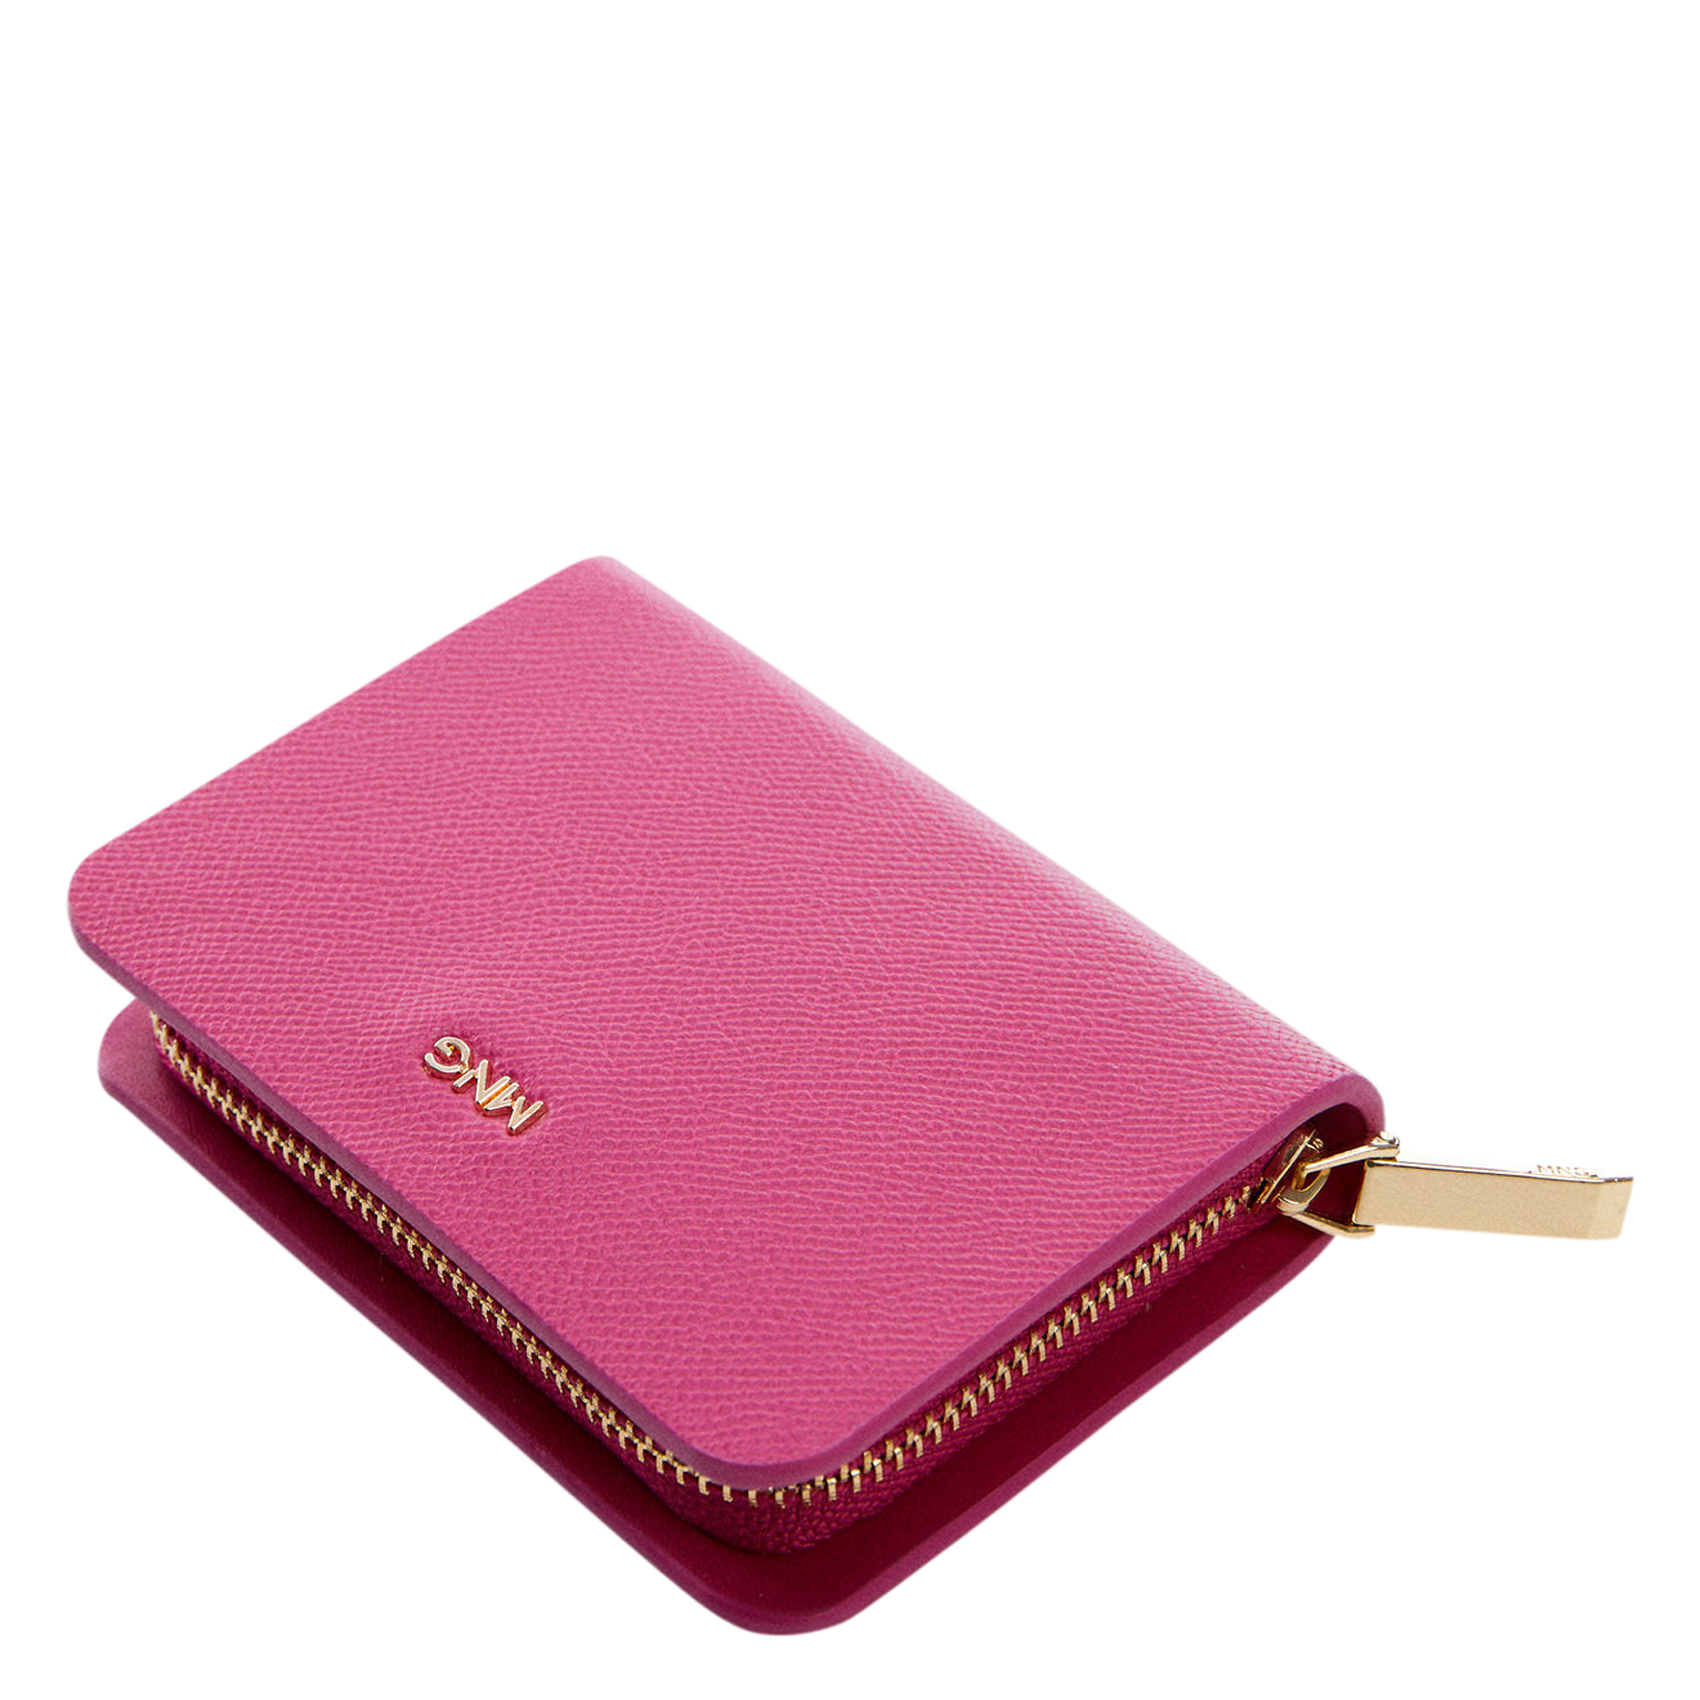 NEW VERSION Tory Burch Pink Mango Leather Fleming Convertible Bag $598  192485665109 | eBay